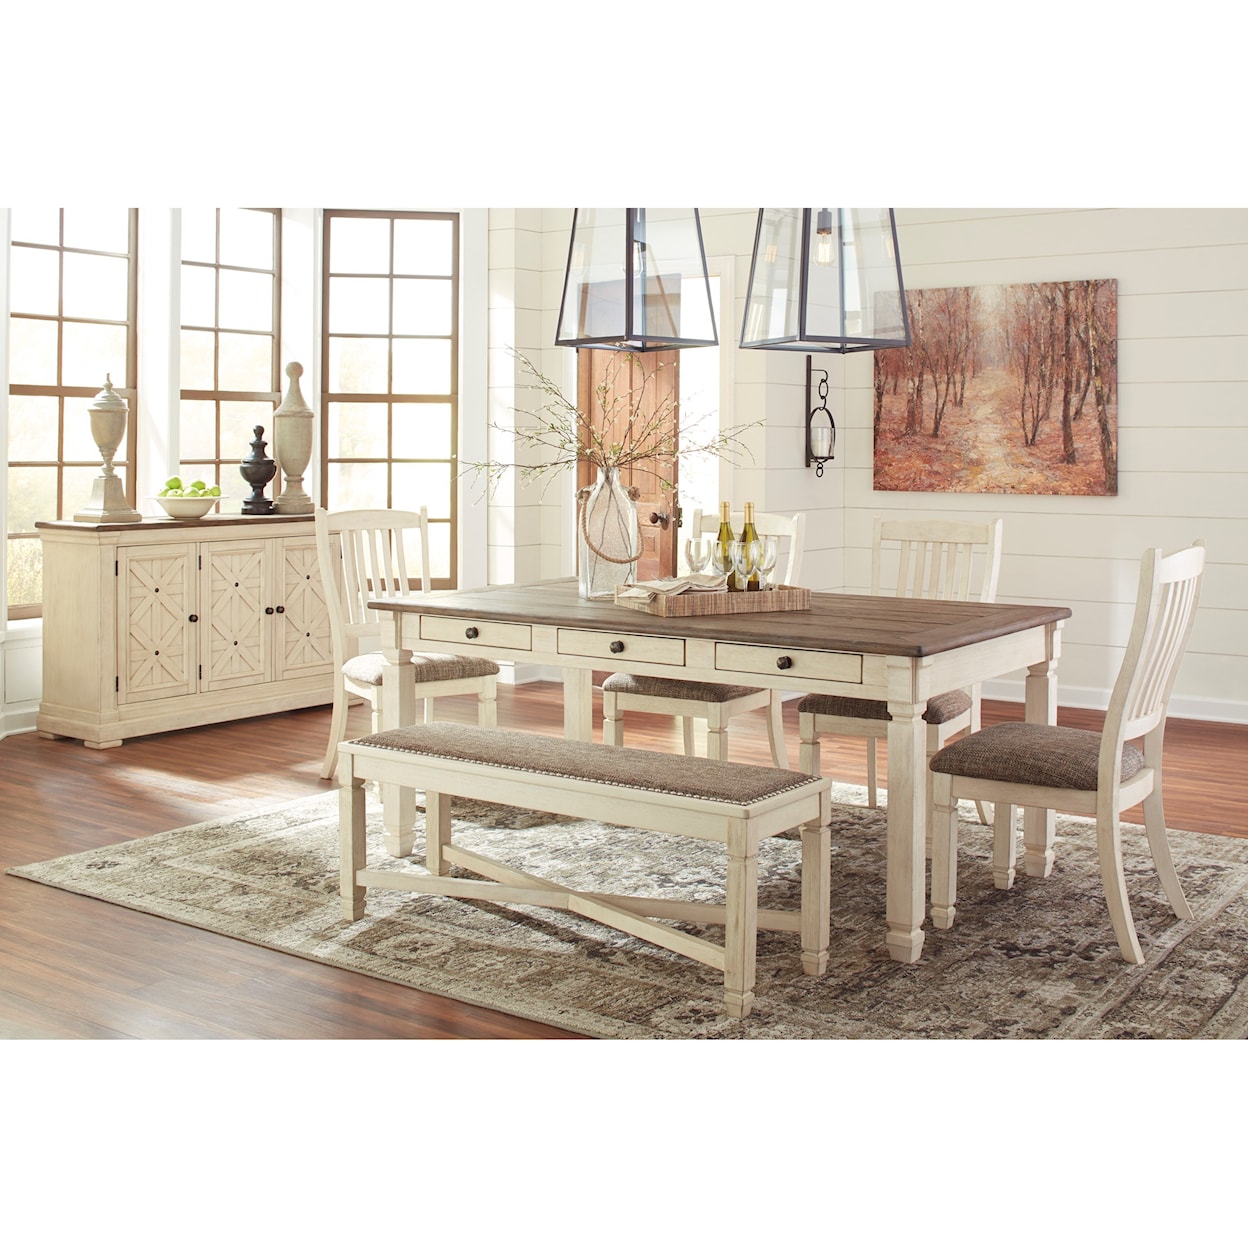 Ashley Furniture Signature Design Bolanburg Formal Dining Room Group